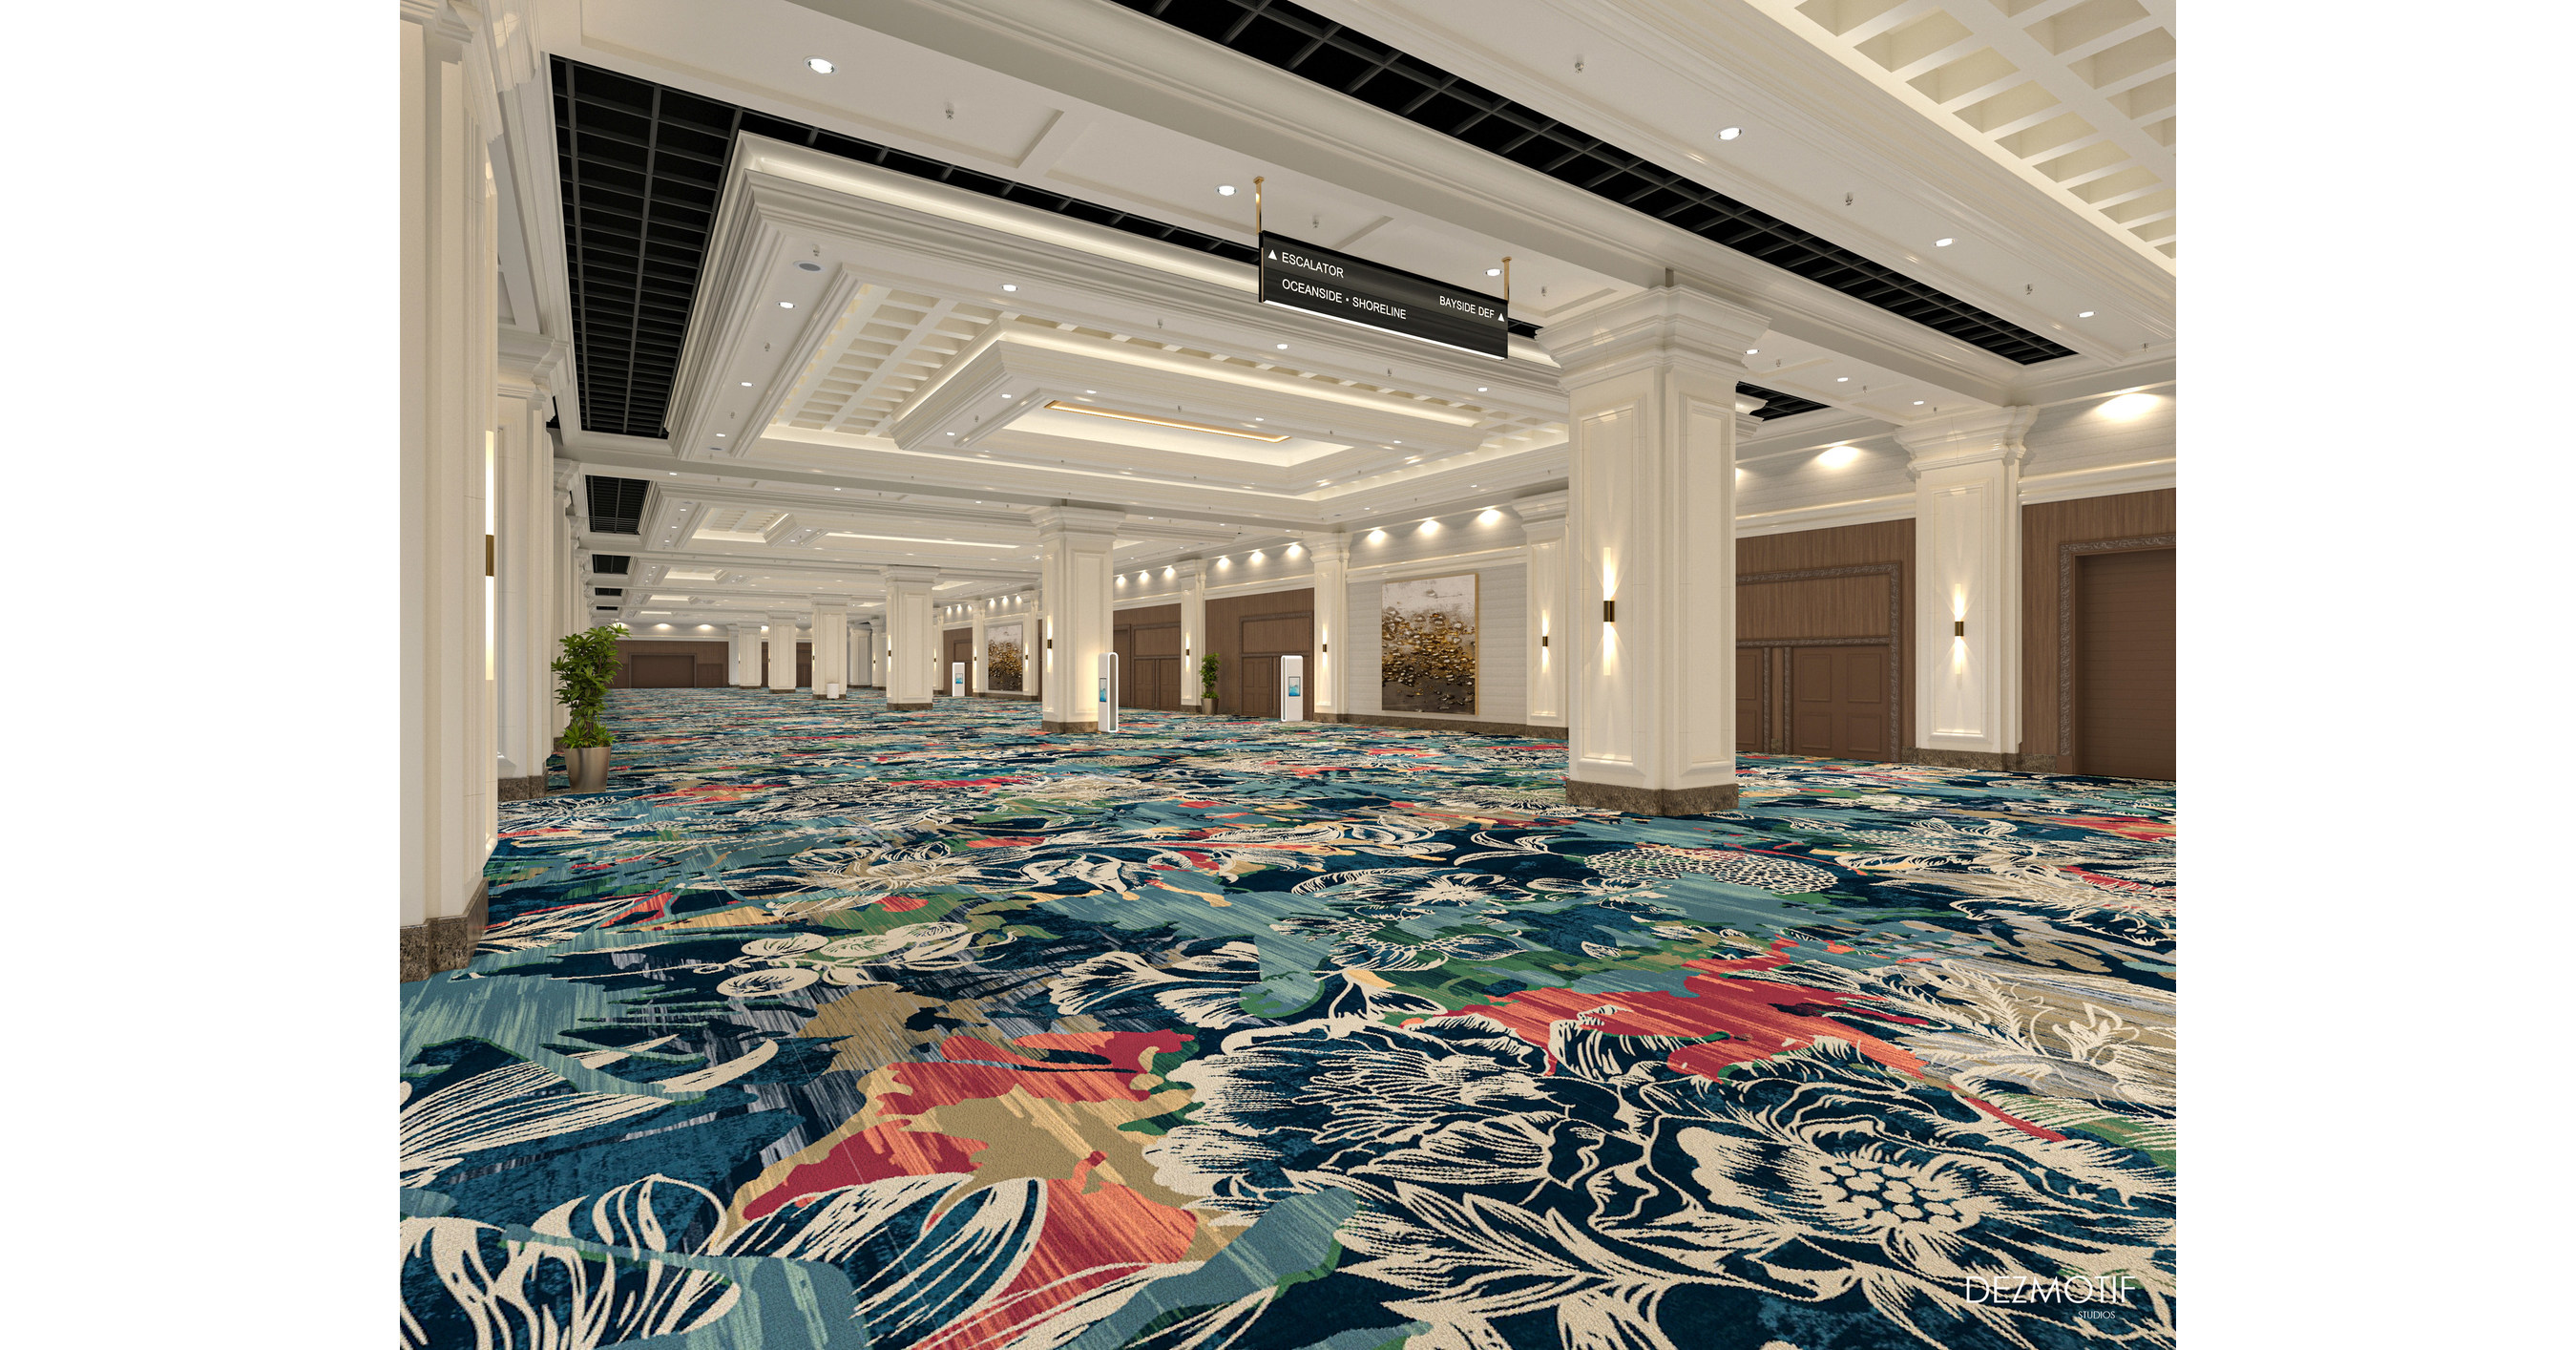 Mandalay Bay convention center to undergo $100 million remodel